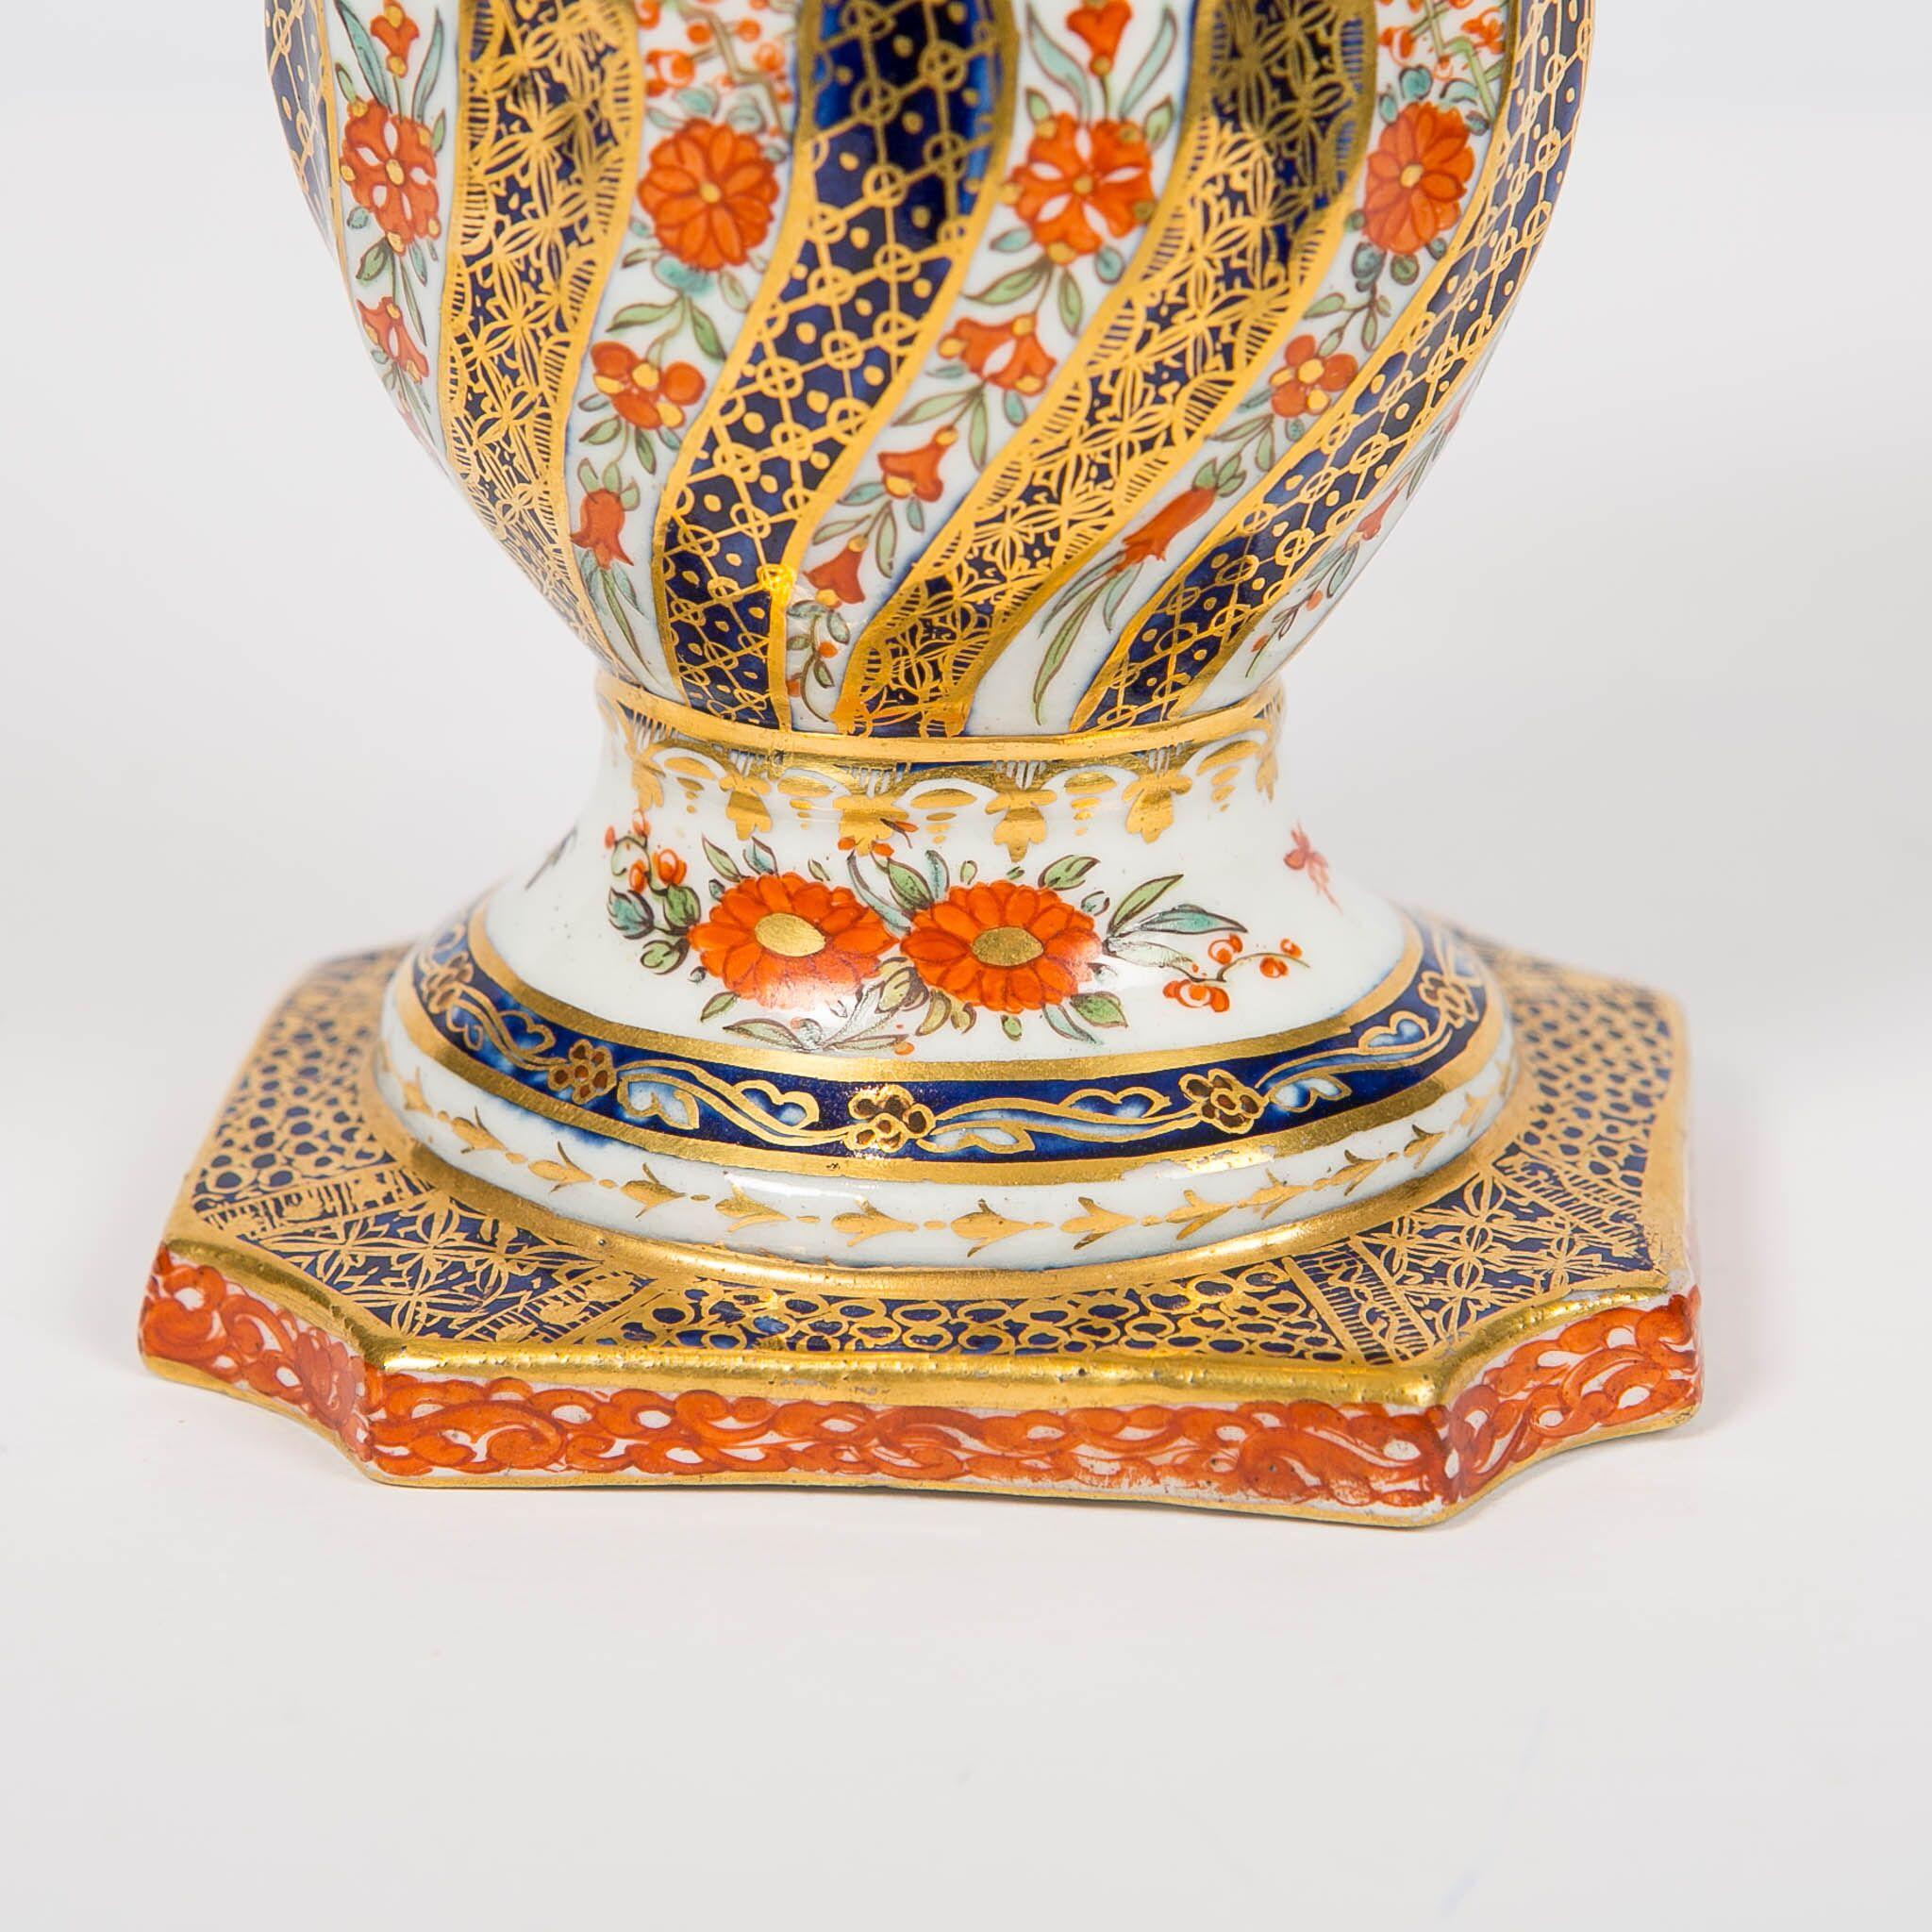 Regency Worcester Porcelain Imari Bud Vase Hand Painted in England, circa 1810